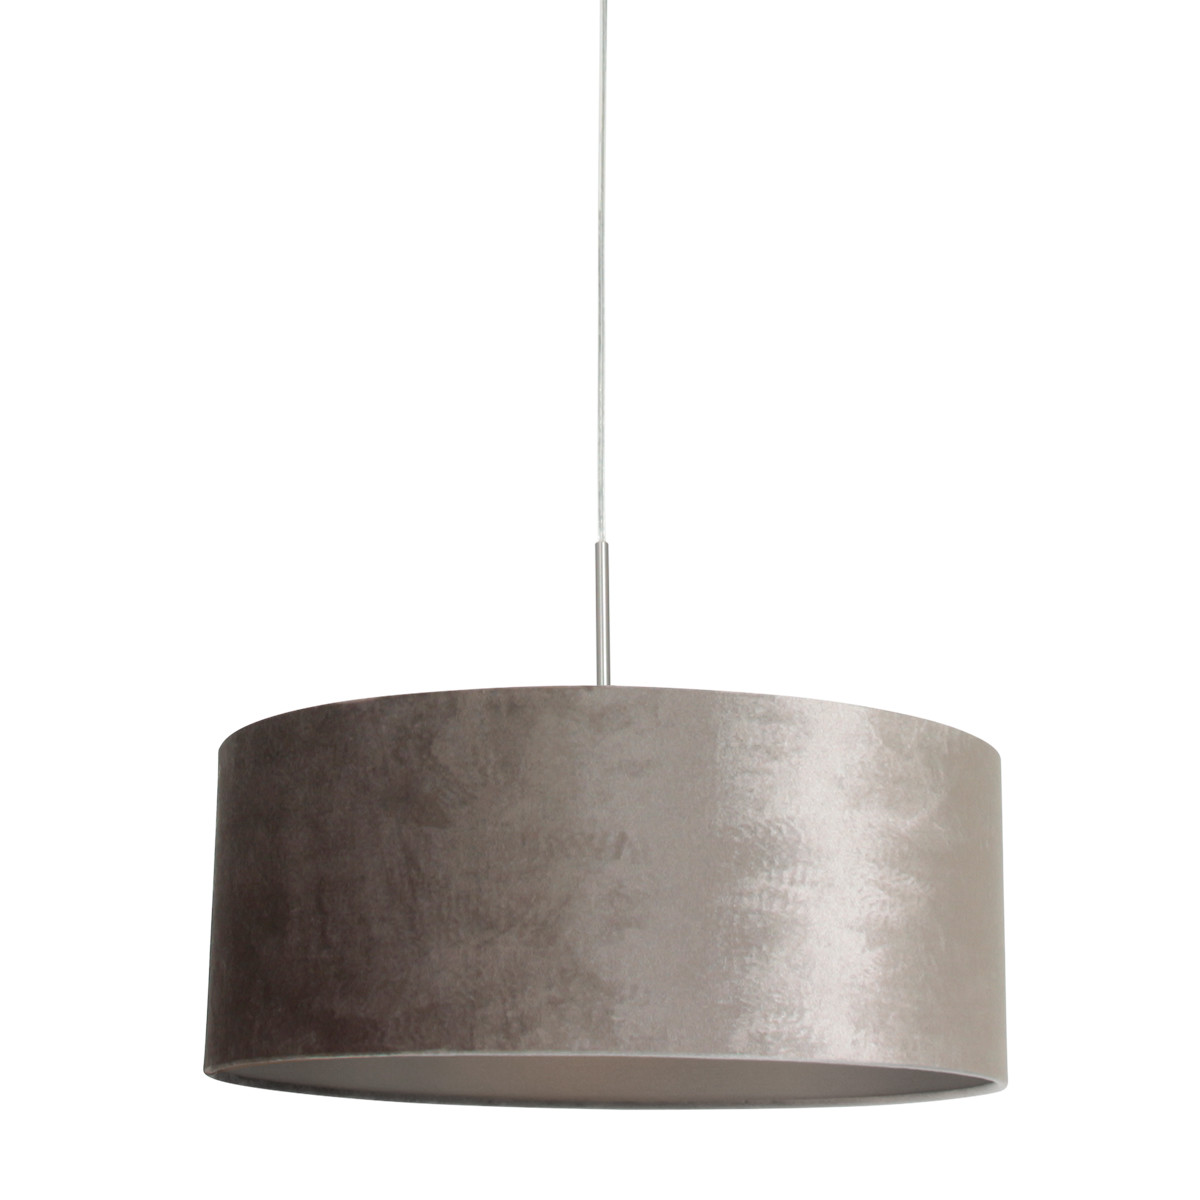 hanglamp-met-ronde-zilveren-kap-steinhauer-sparkled-light-8149st